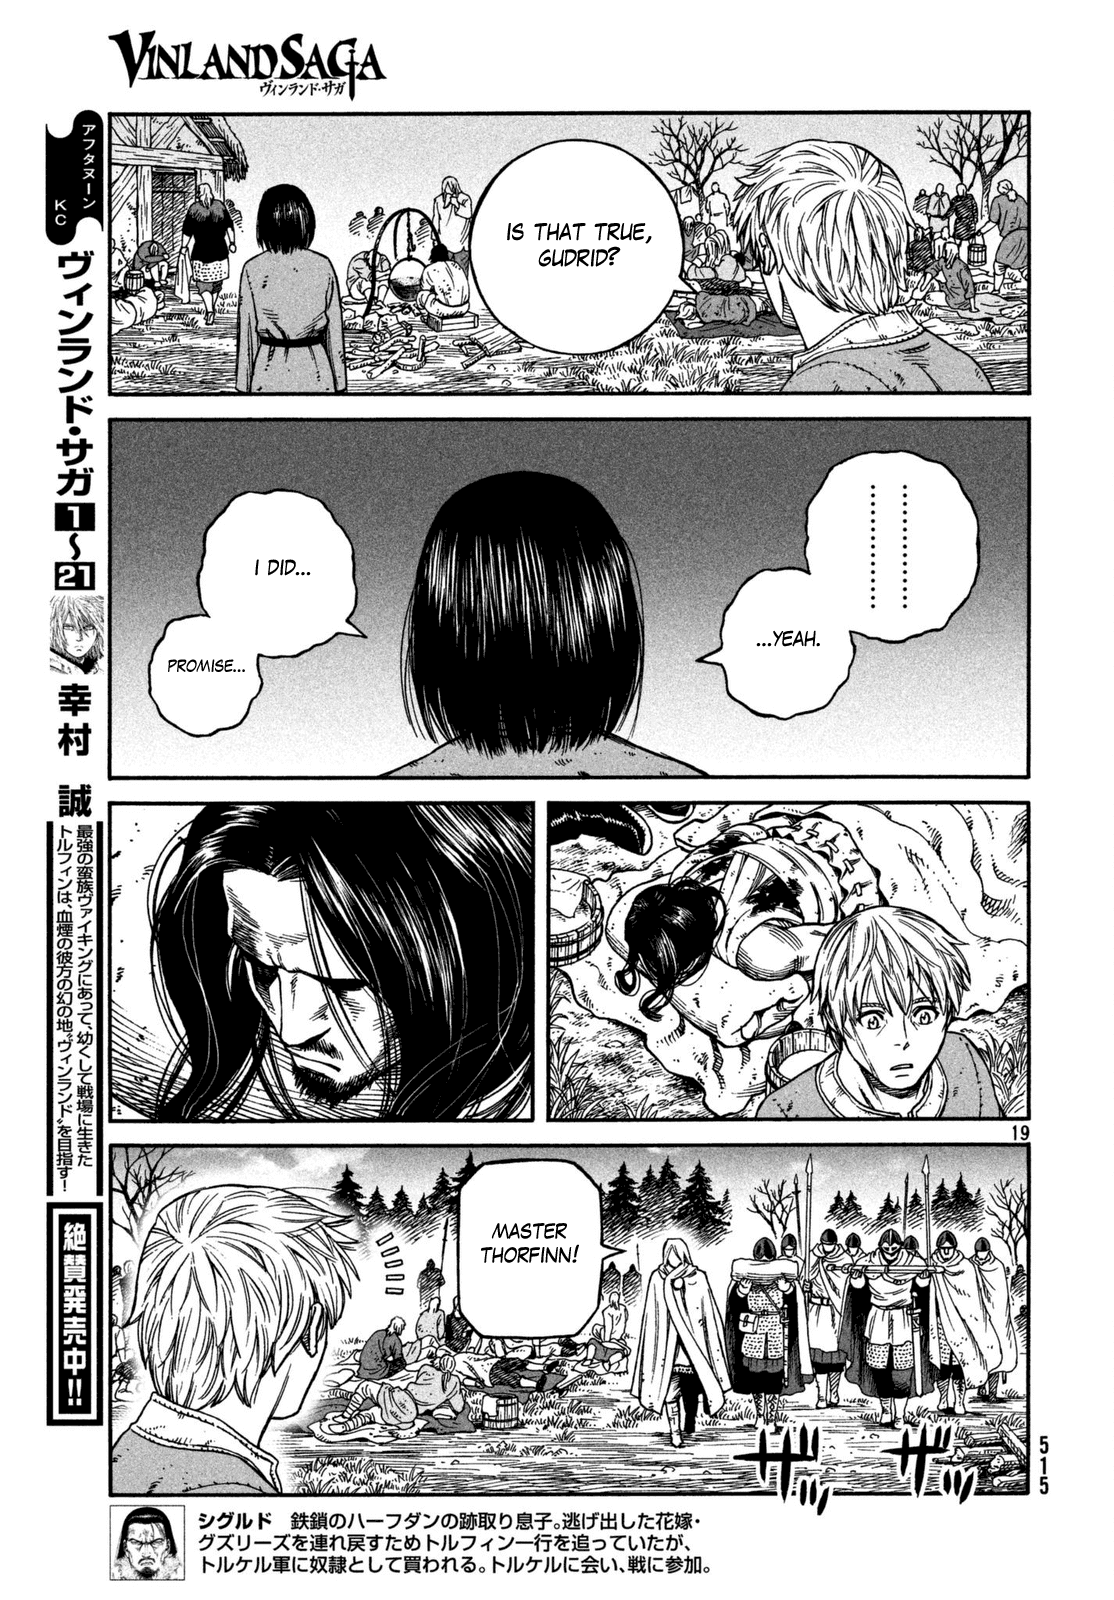 Vinland Saga Manga Manga Chapter - 158 - image 19